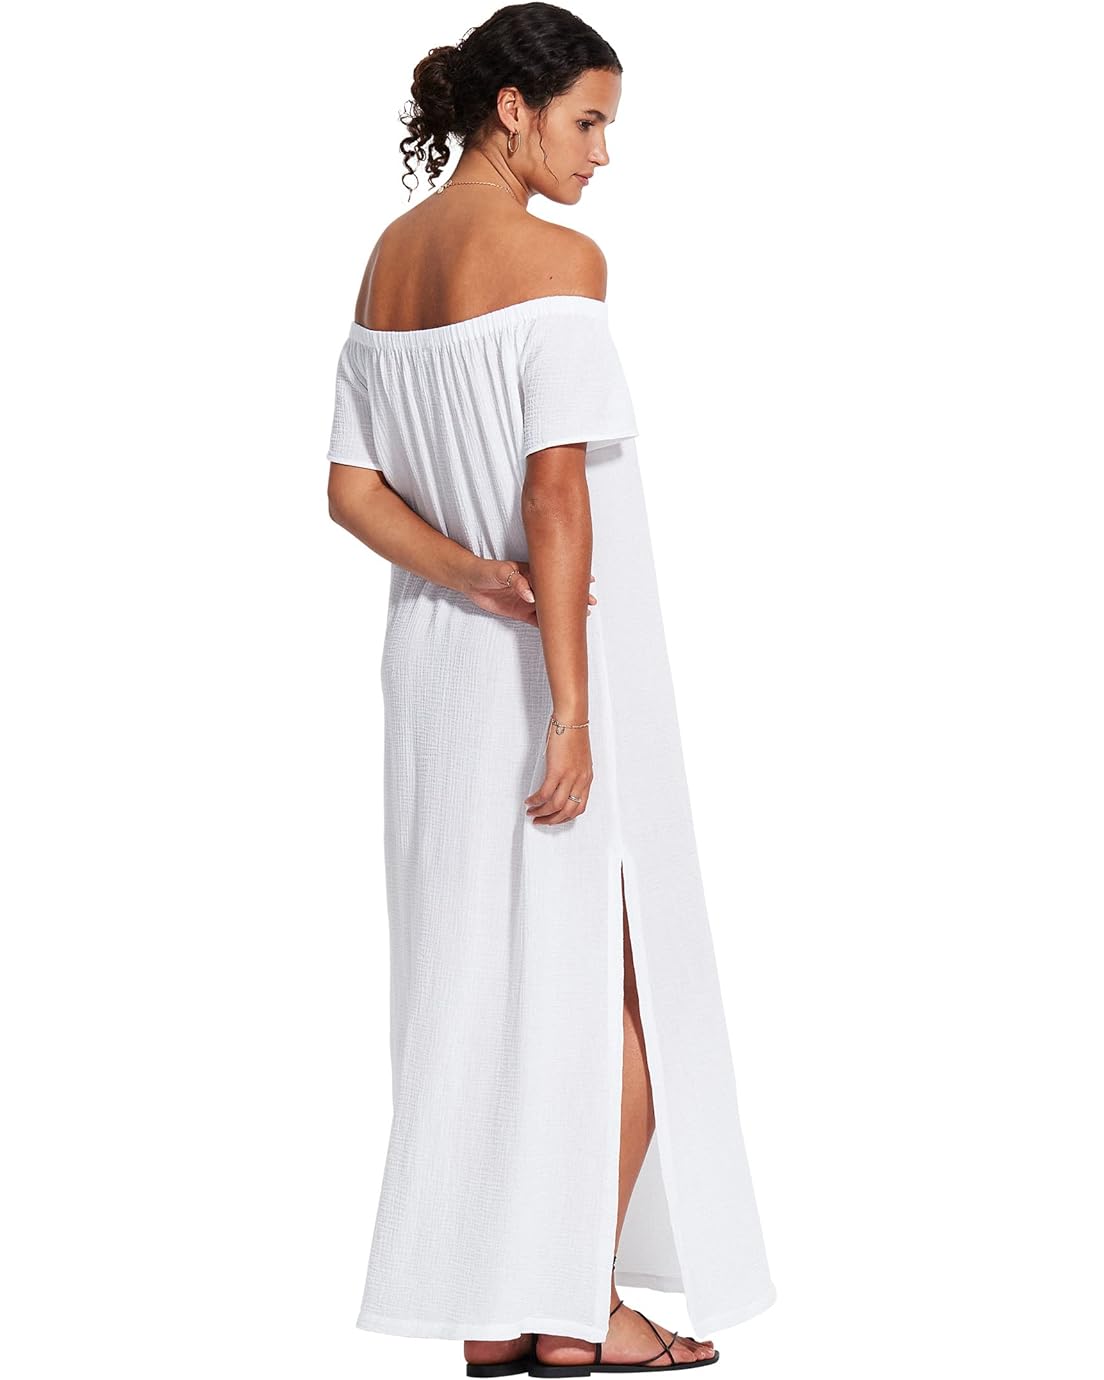  Seafolly Beach Edit Double Cloth Strapless Dress